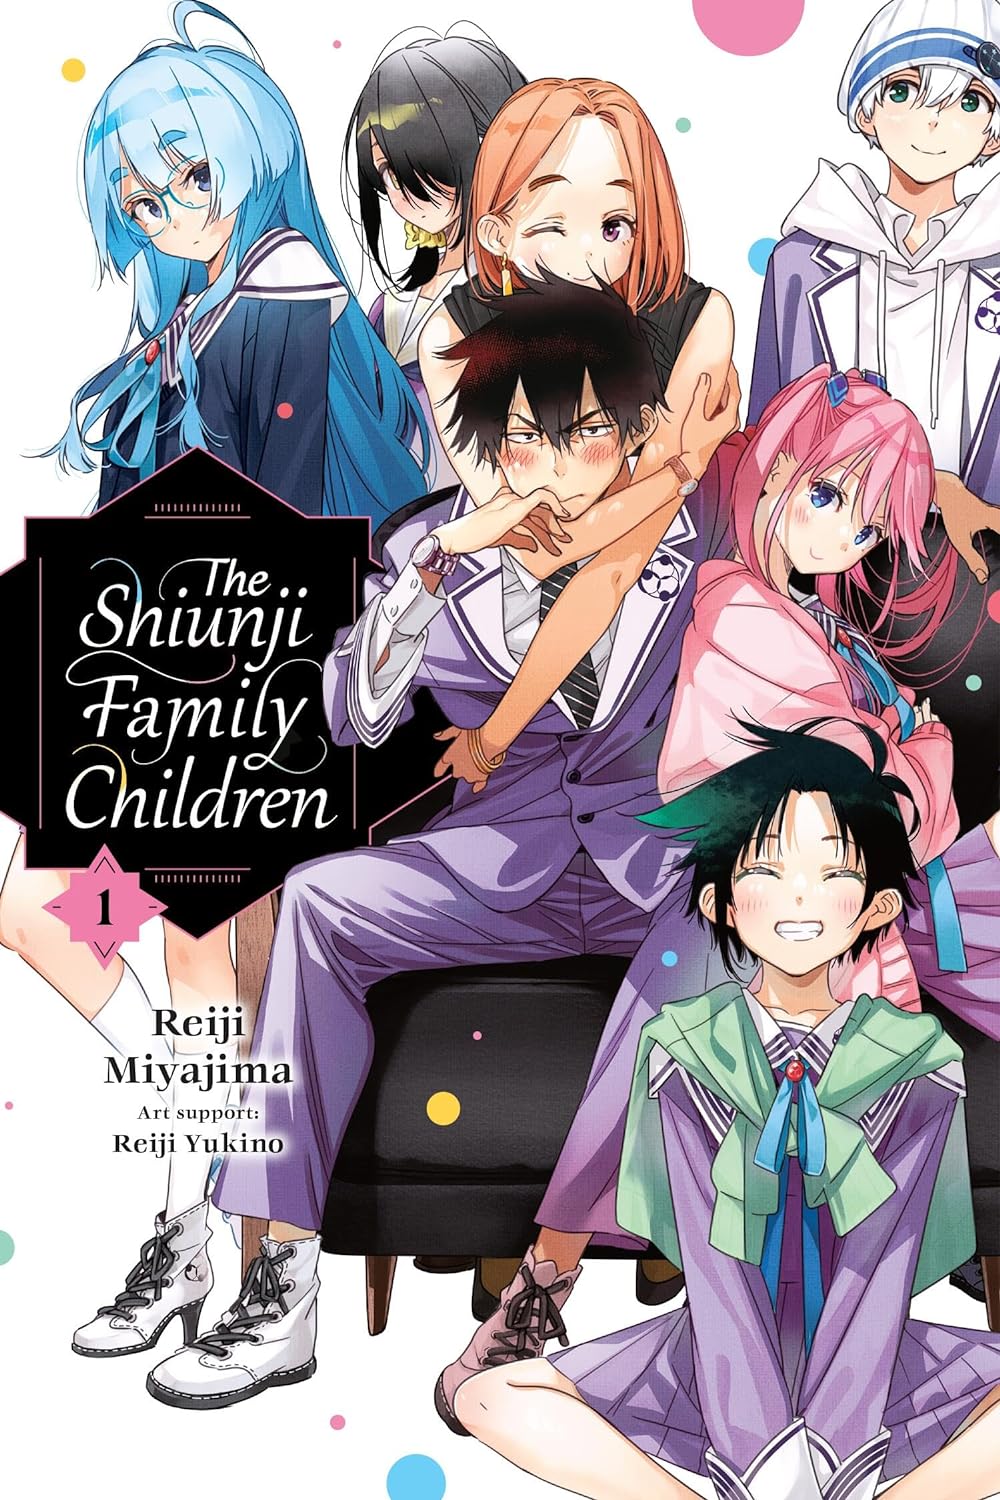 The Shiunji Family Children Vol. 01